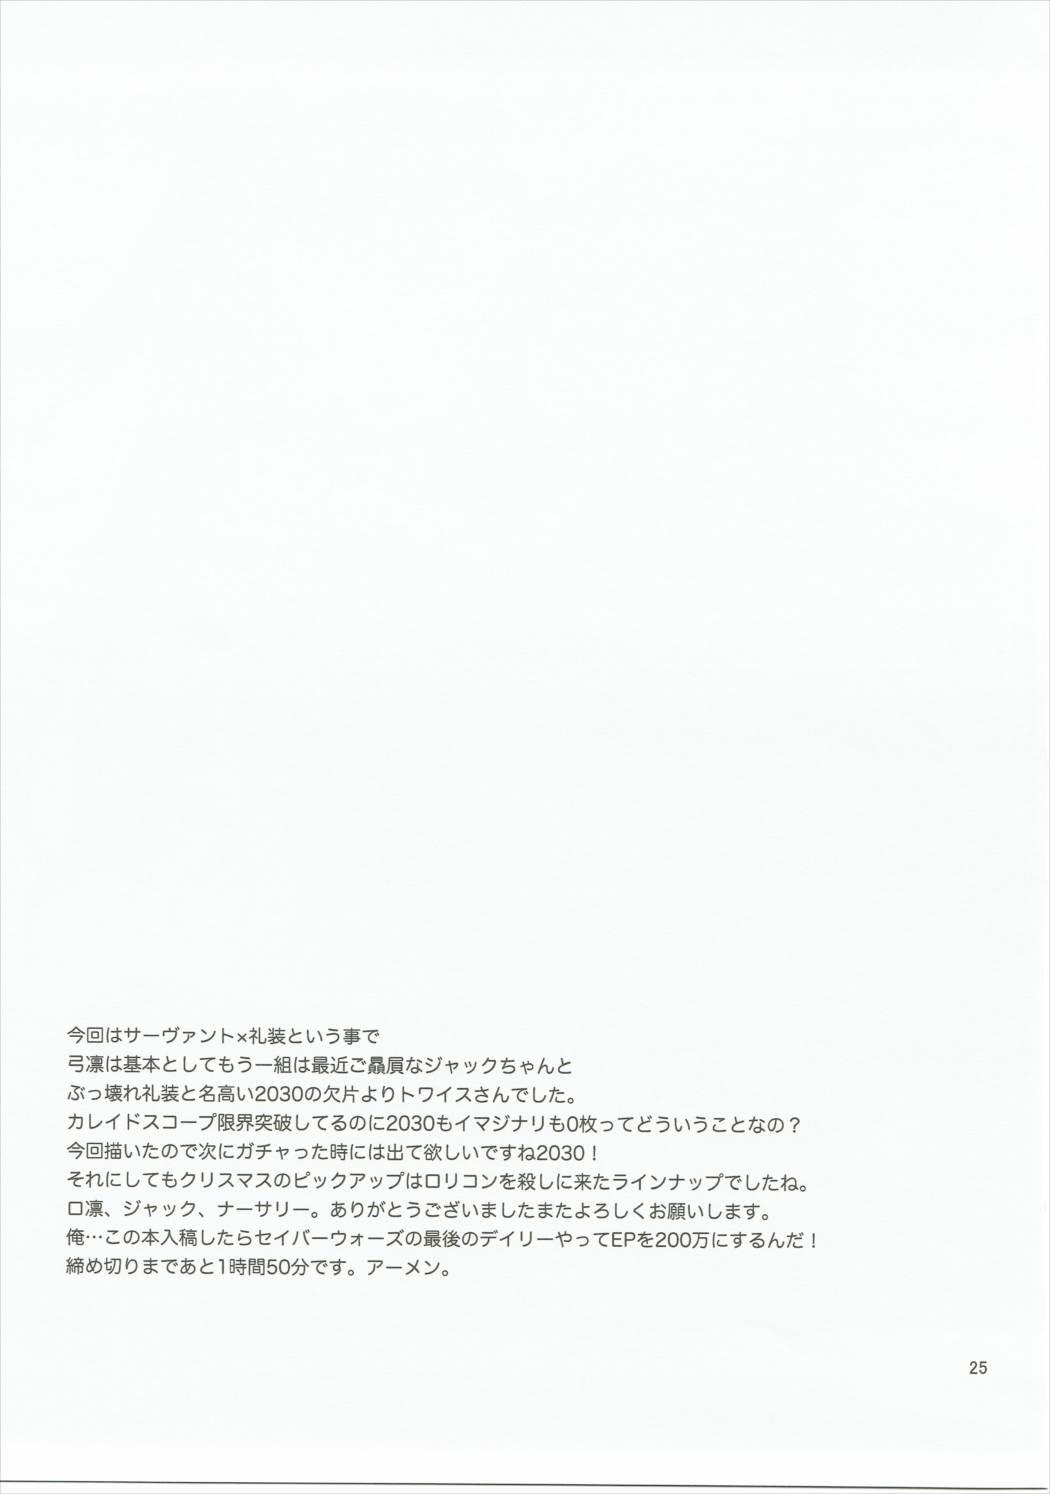 Wam Giji Genkai Toppa Jikken Houkokusho 01 - Fate grand order Bubble - Page 24